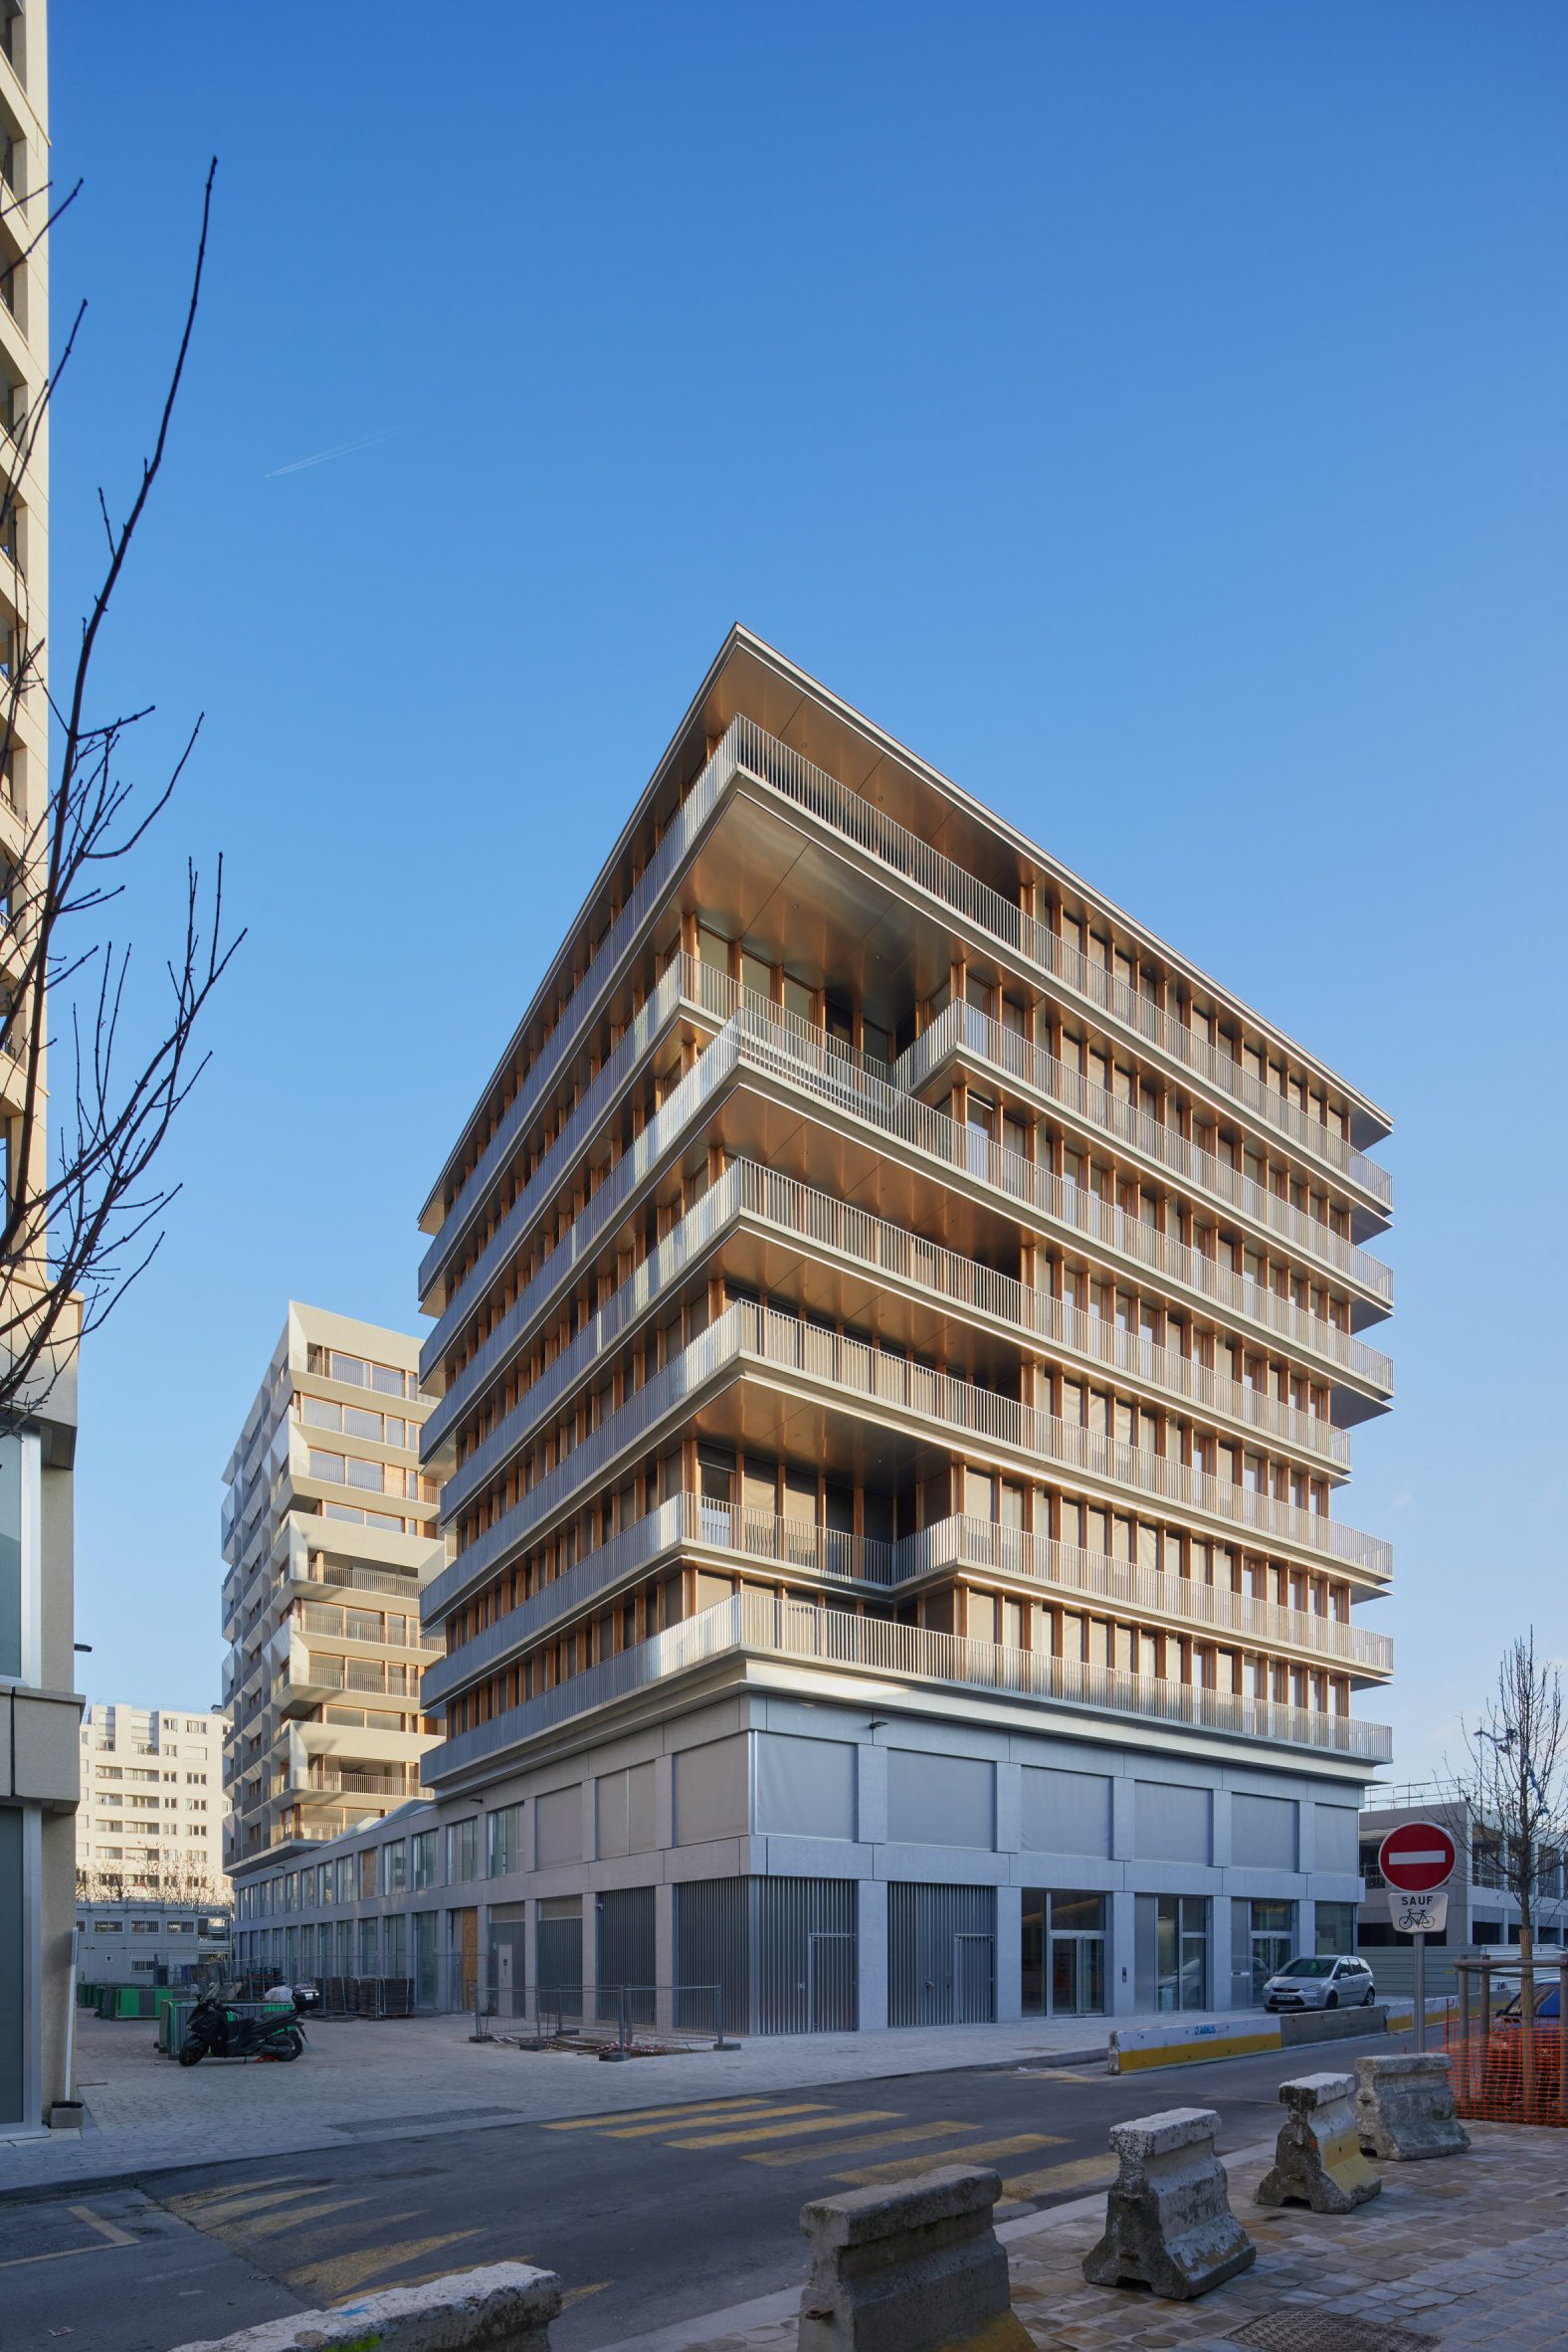 A timber-clad apartment block in Paris